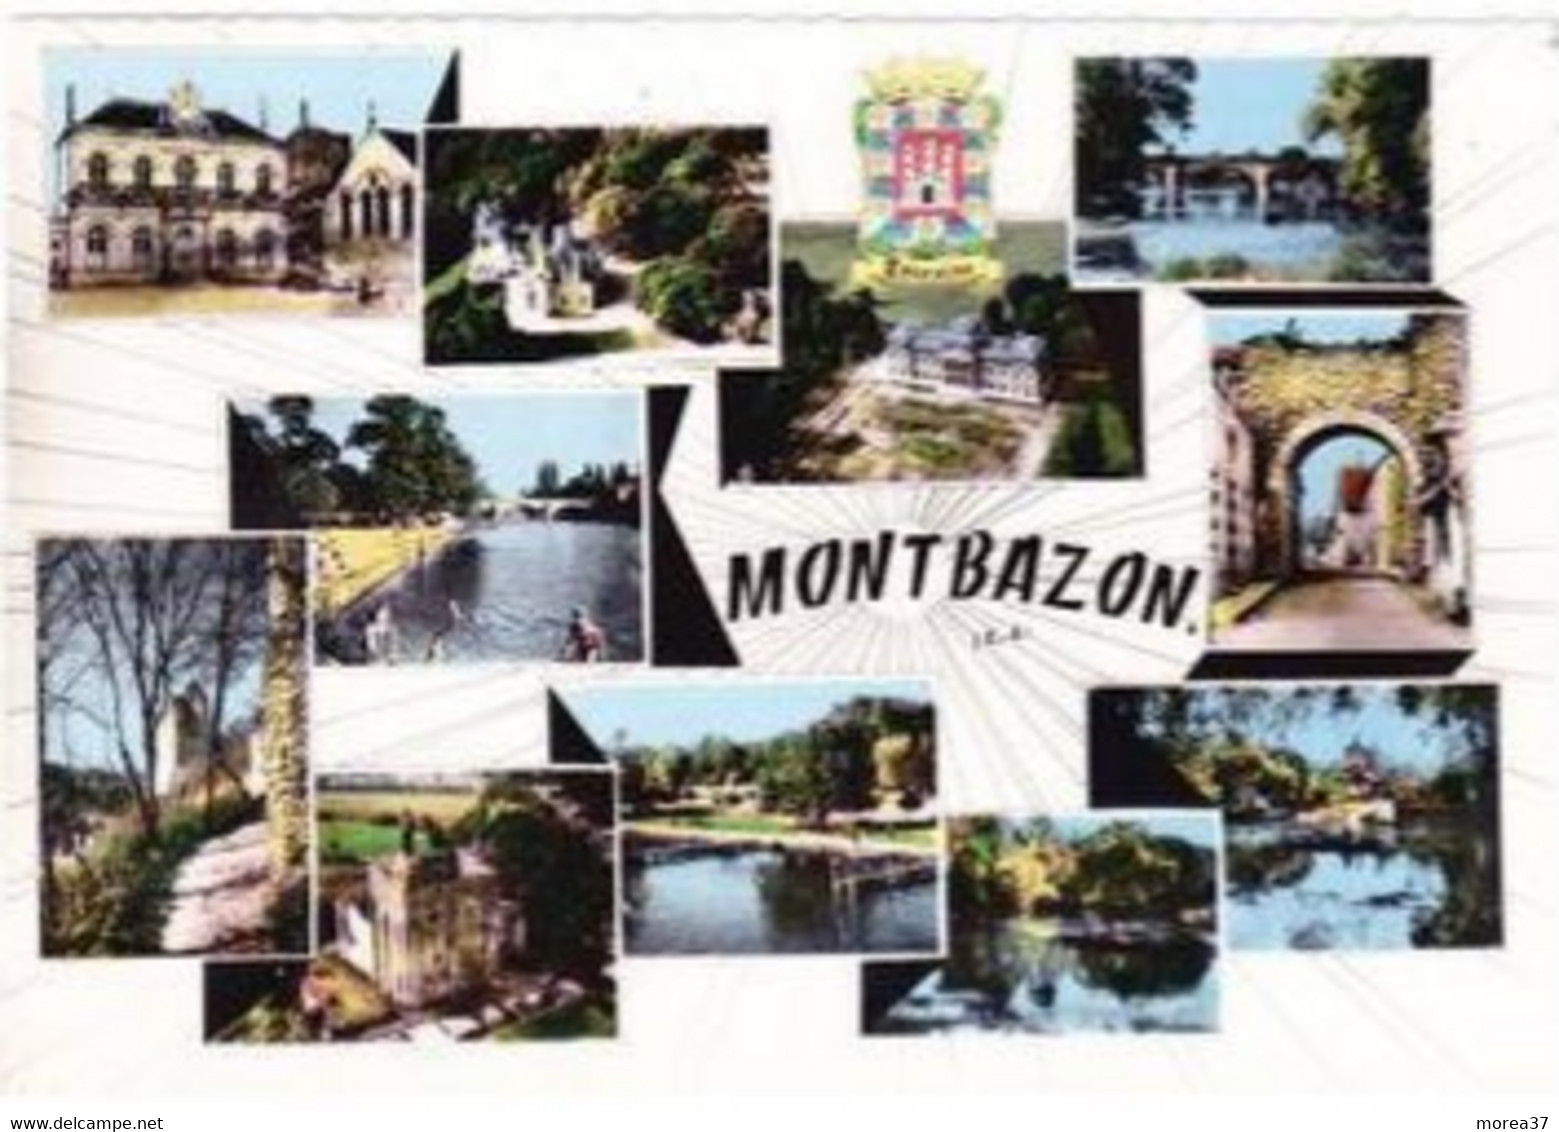 MONTBAZON - Montbazon